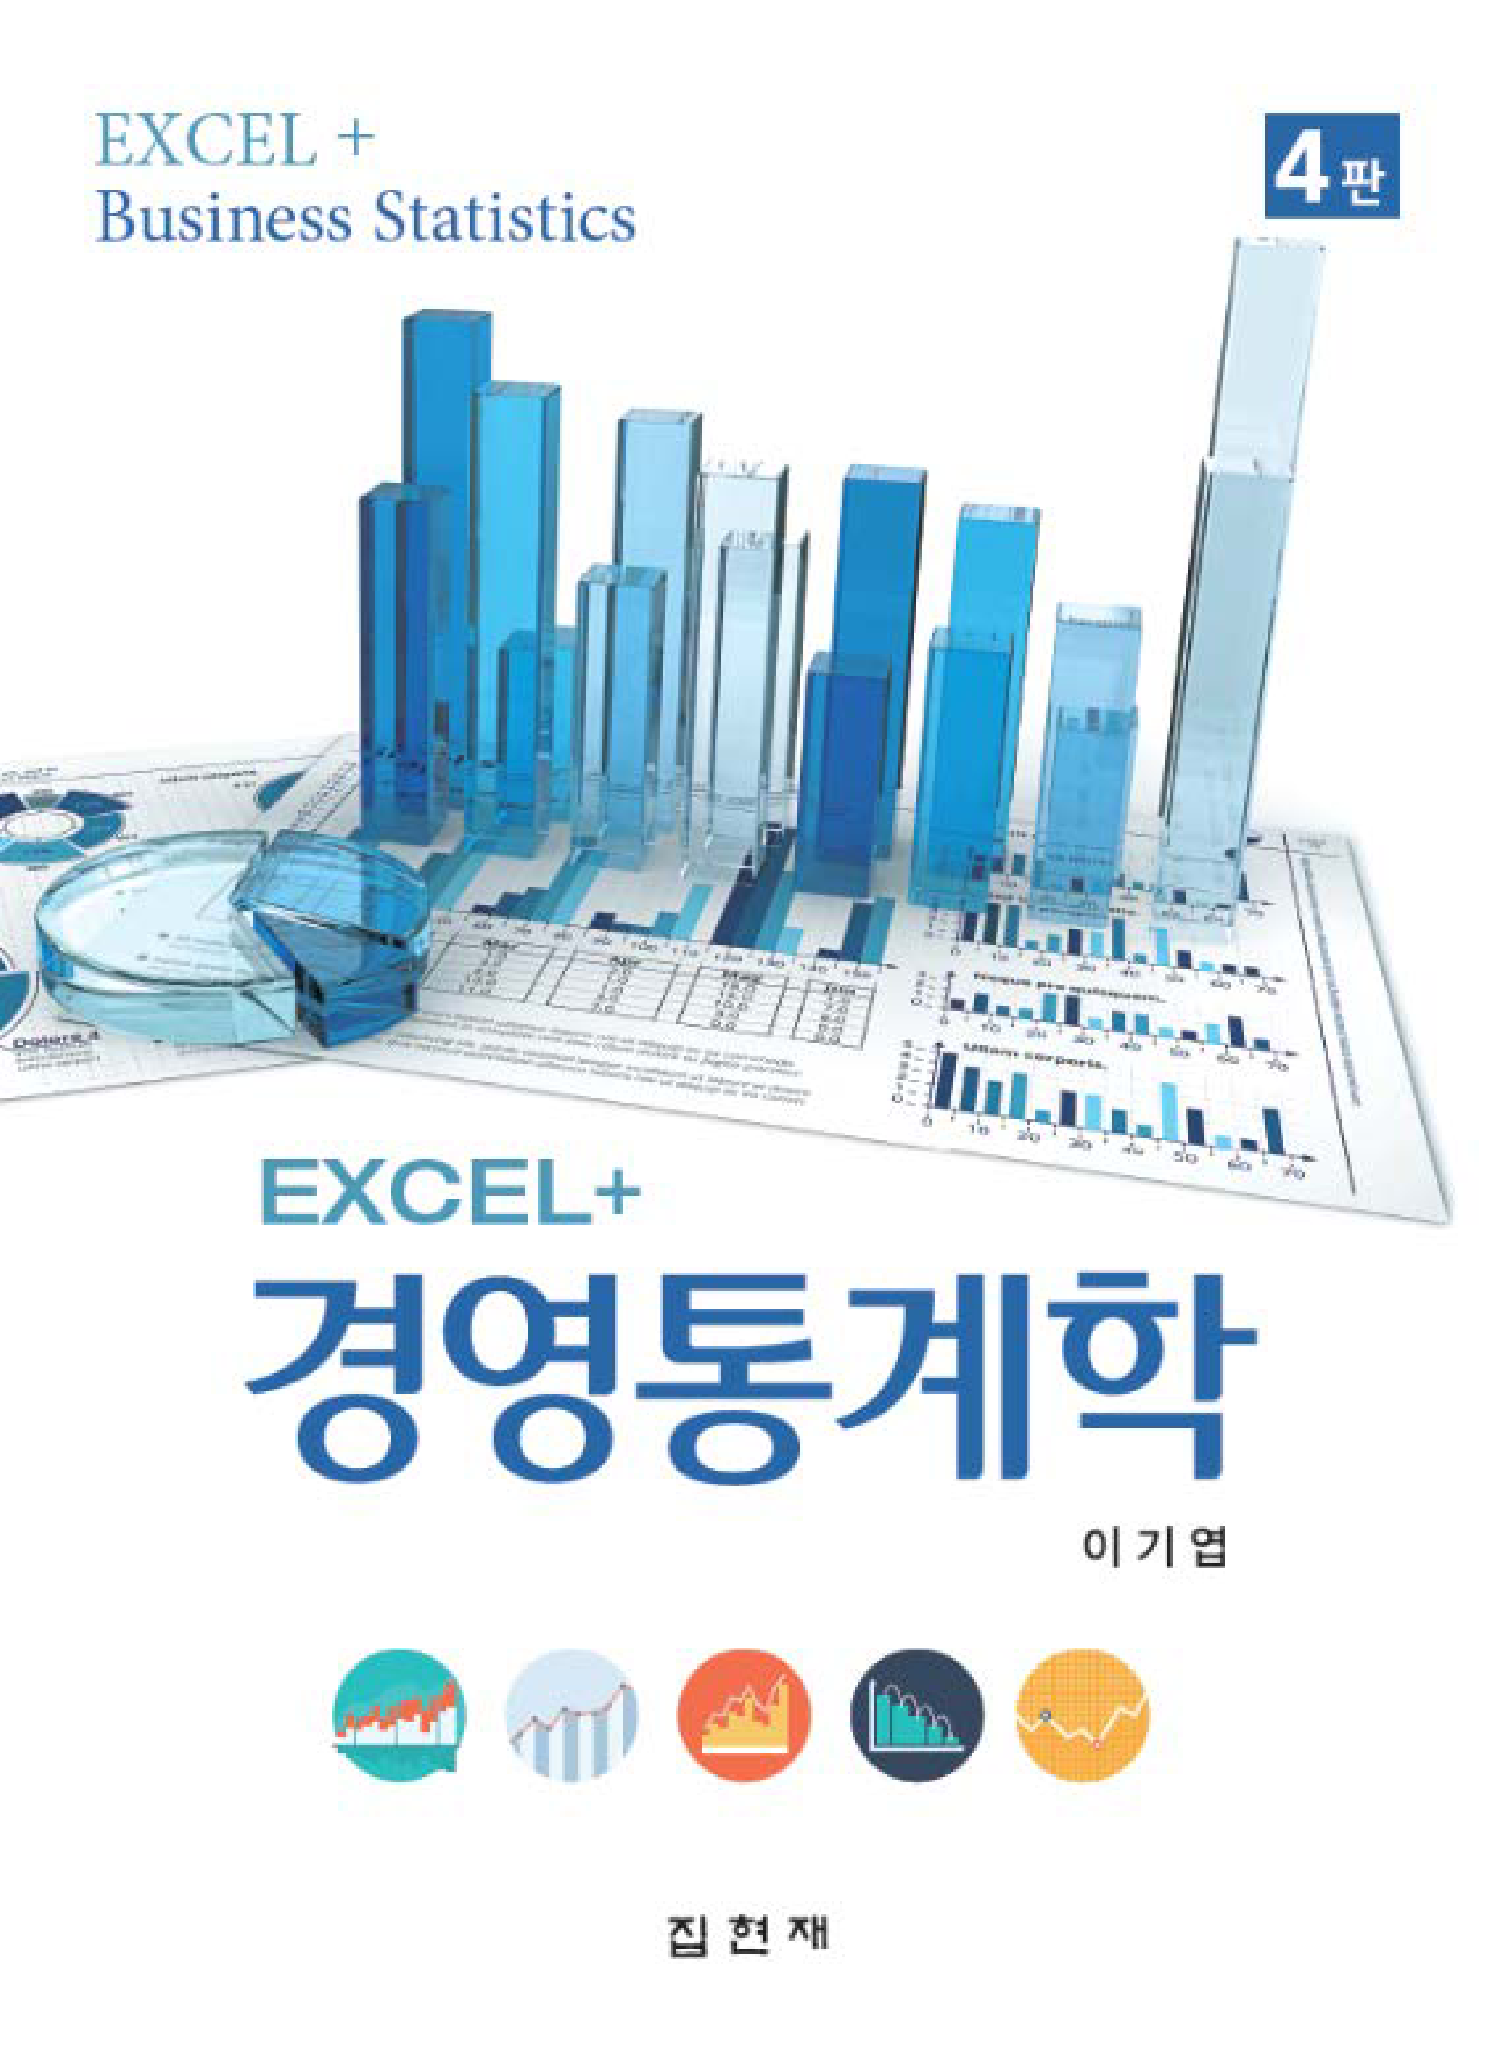 Excel+ 경영통계학 4판